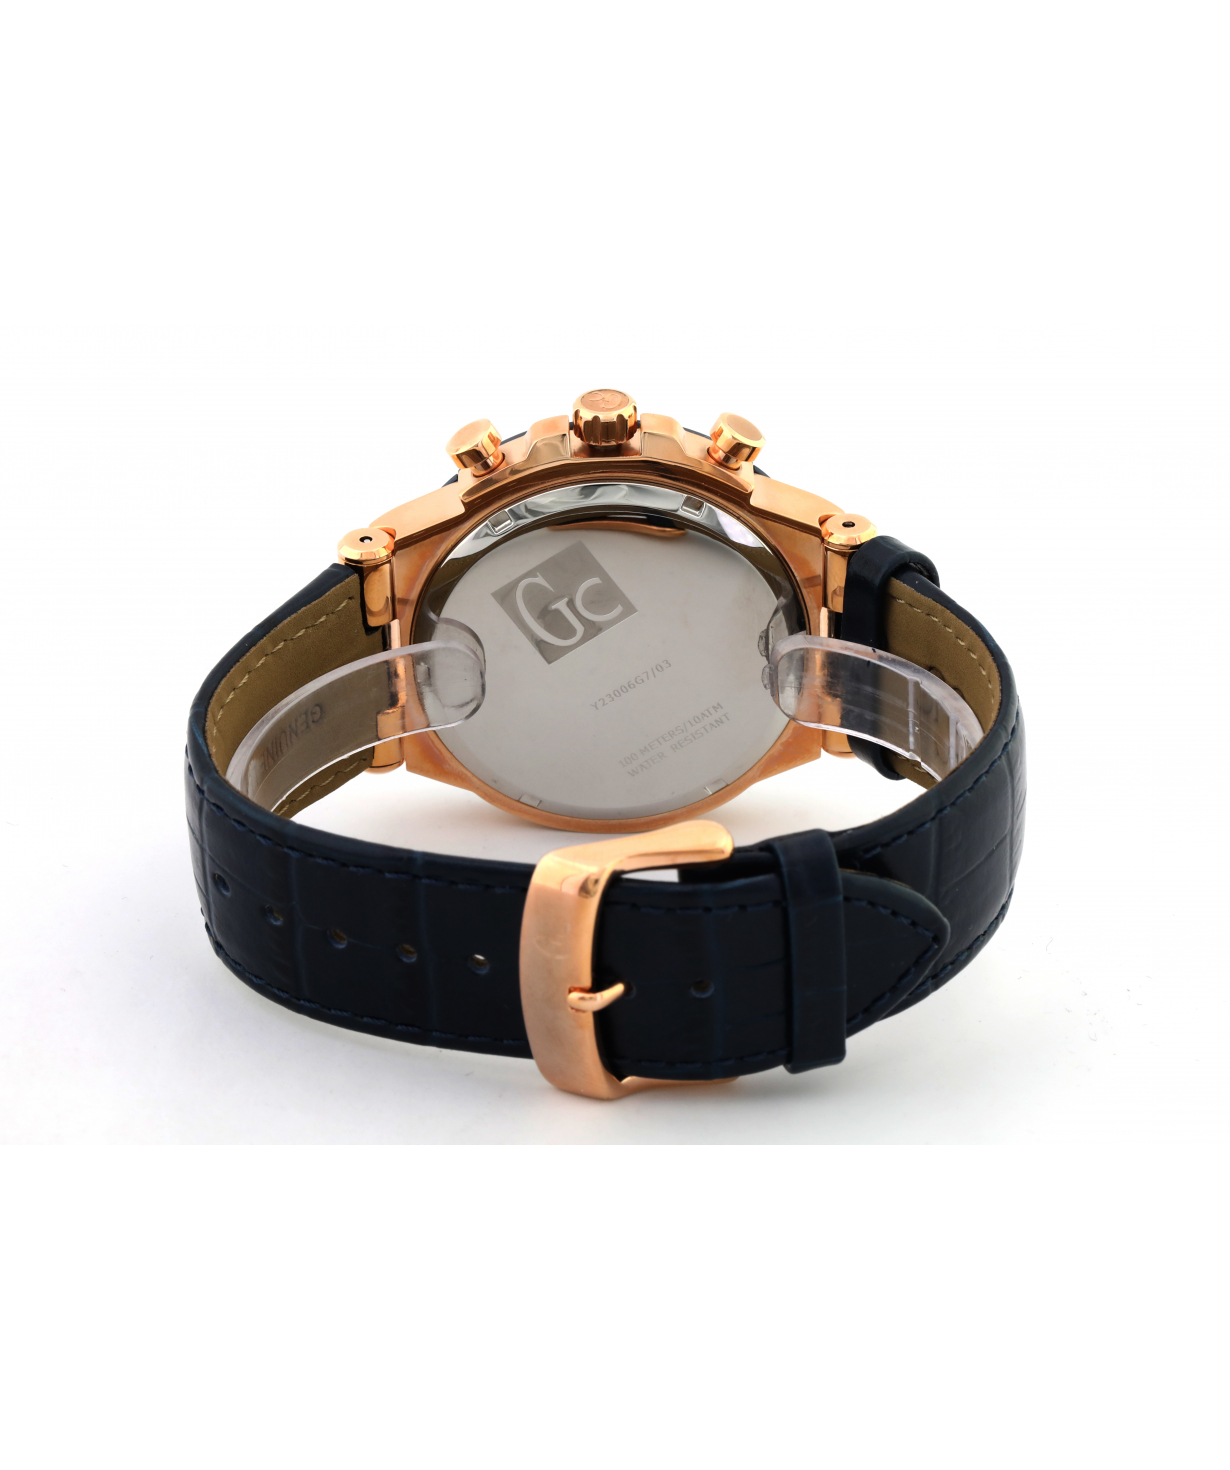 Wrist watch `Gc` Y23006G7